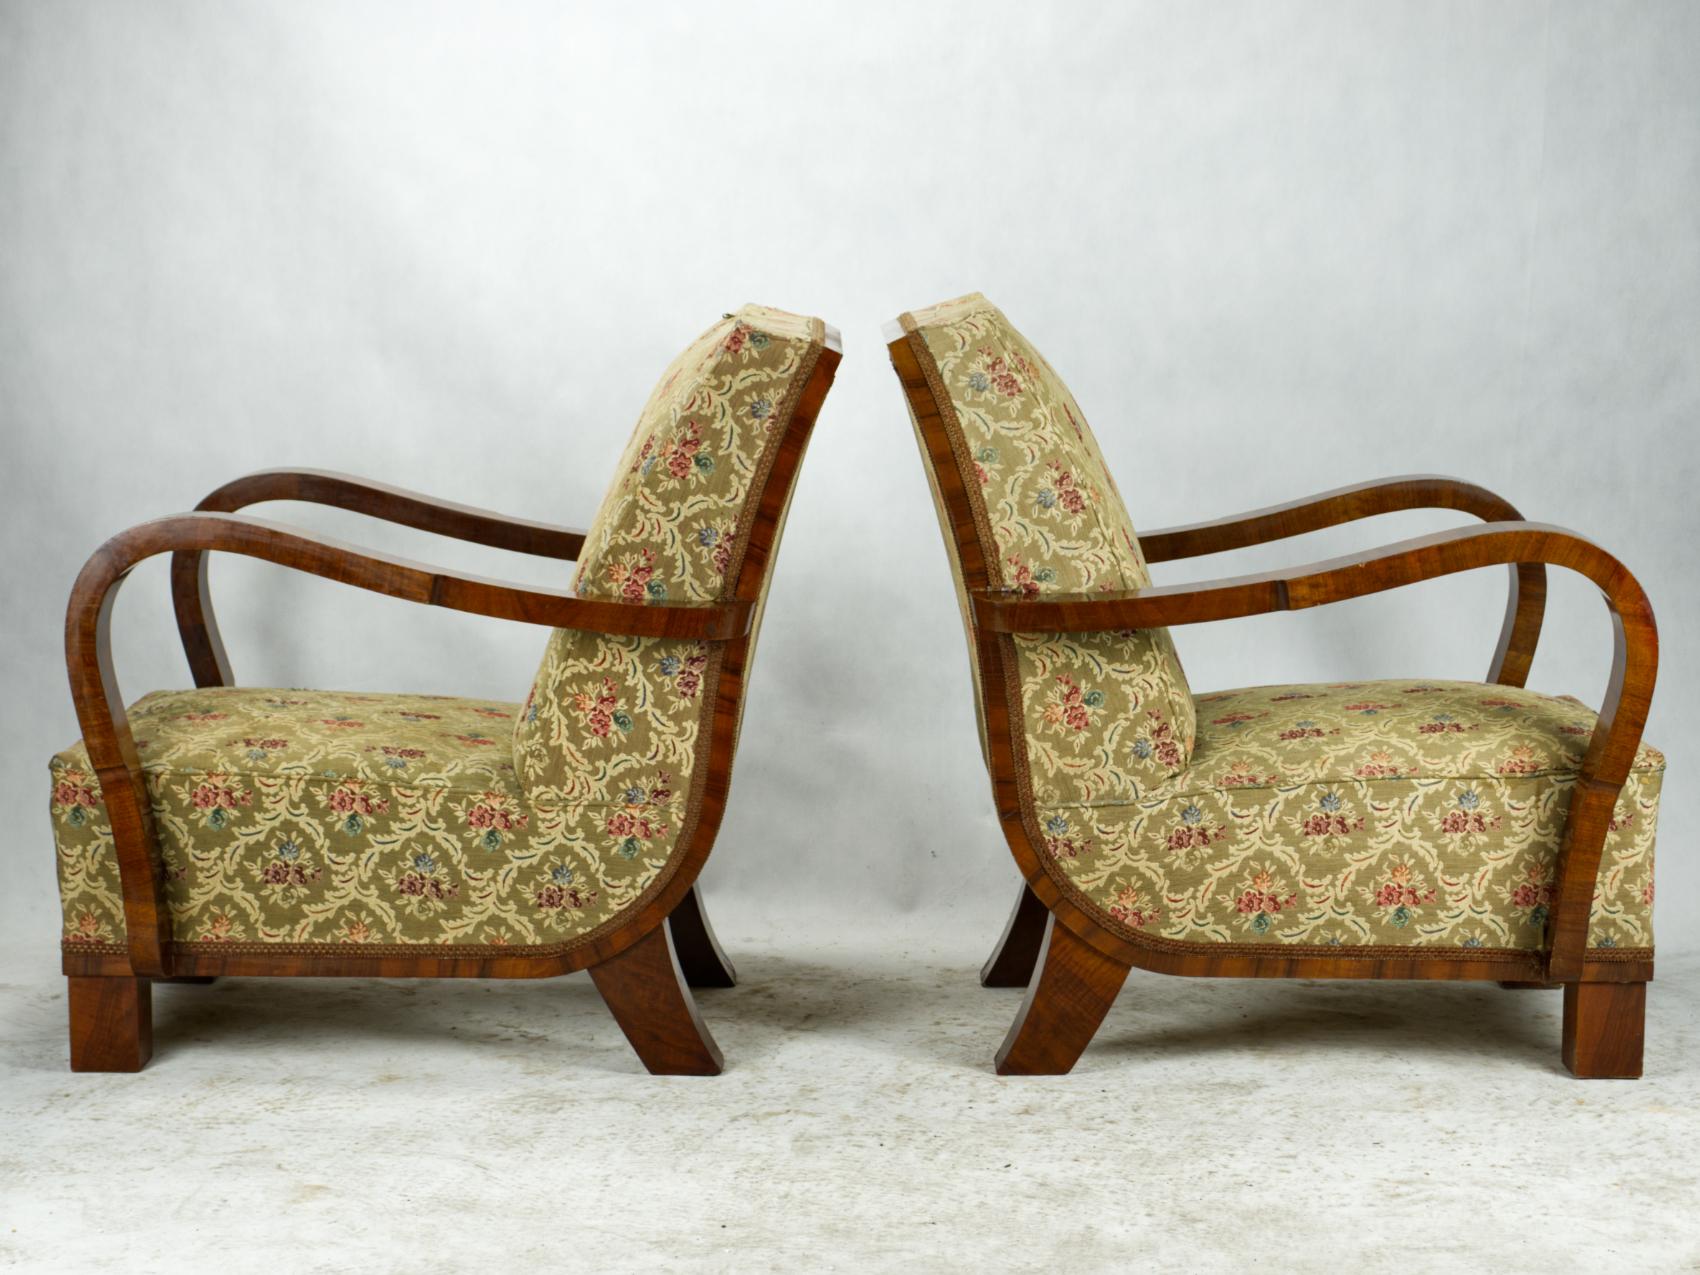 1930s armchair styles